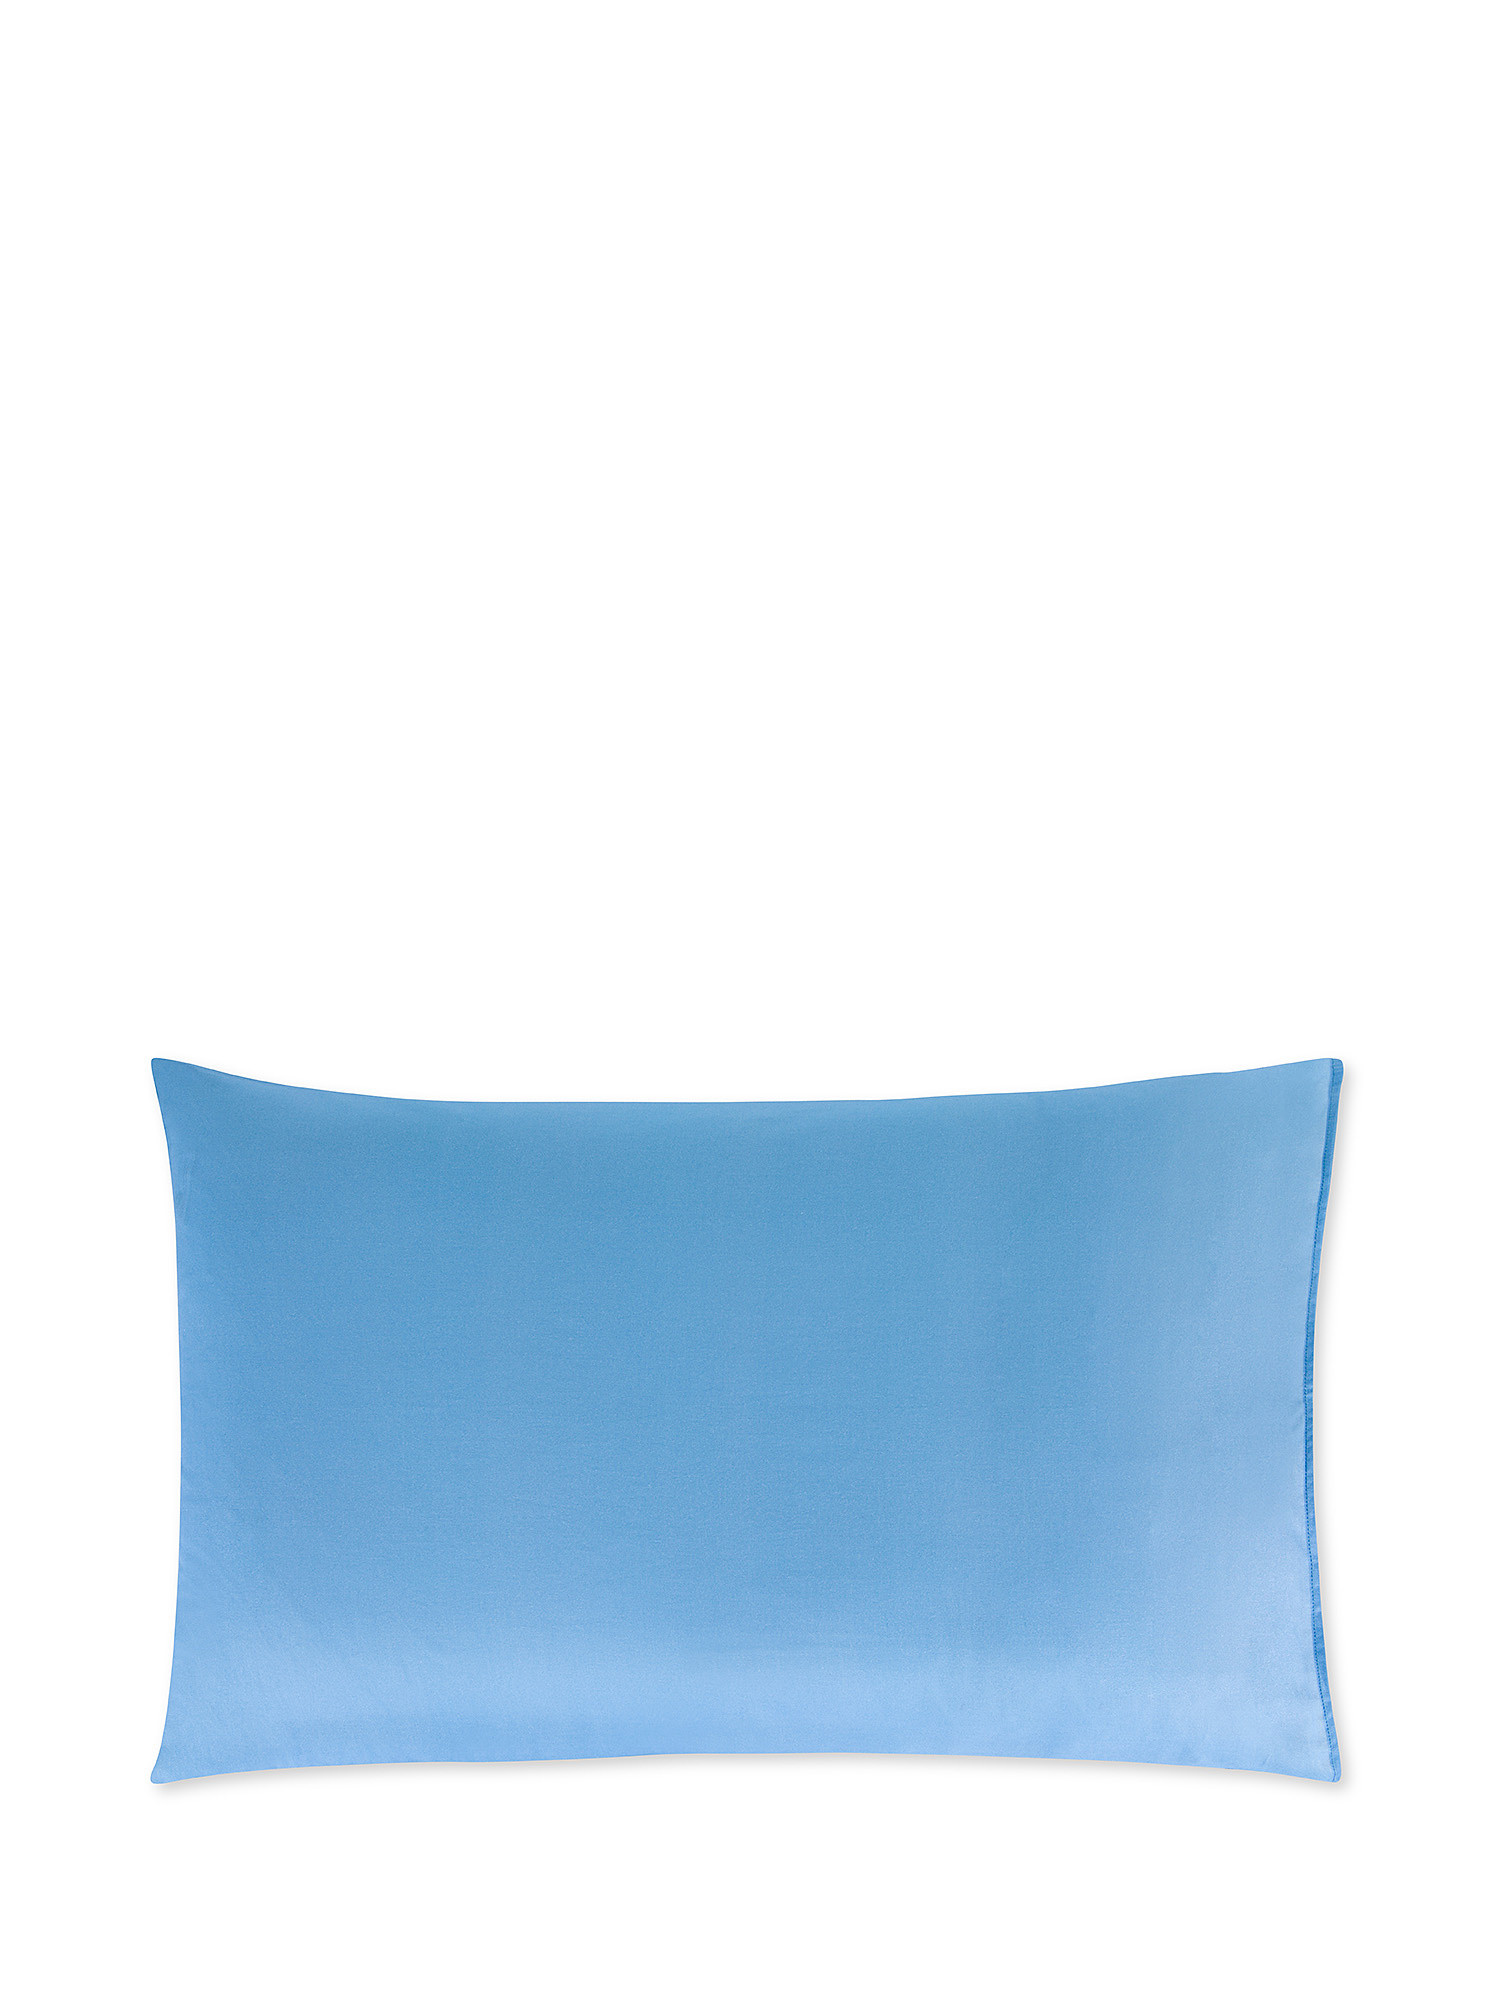 Fish pattern cotton muslin pillowcase, Blue, large image number 1